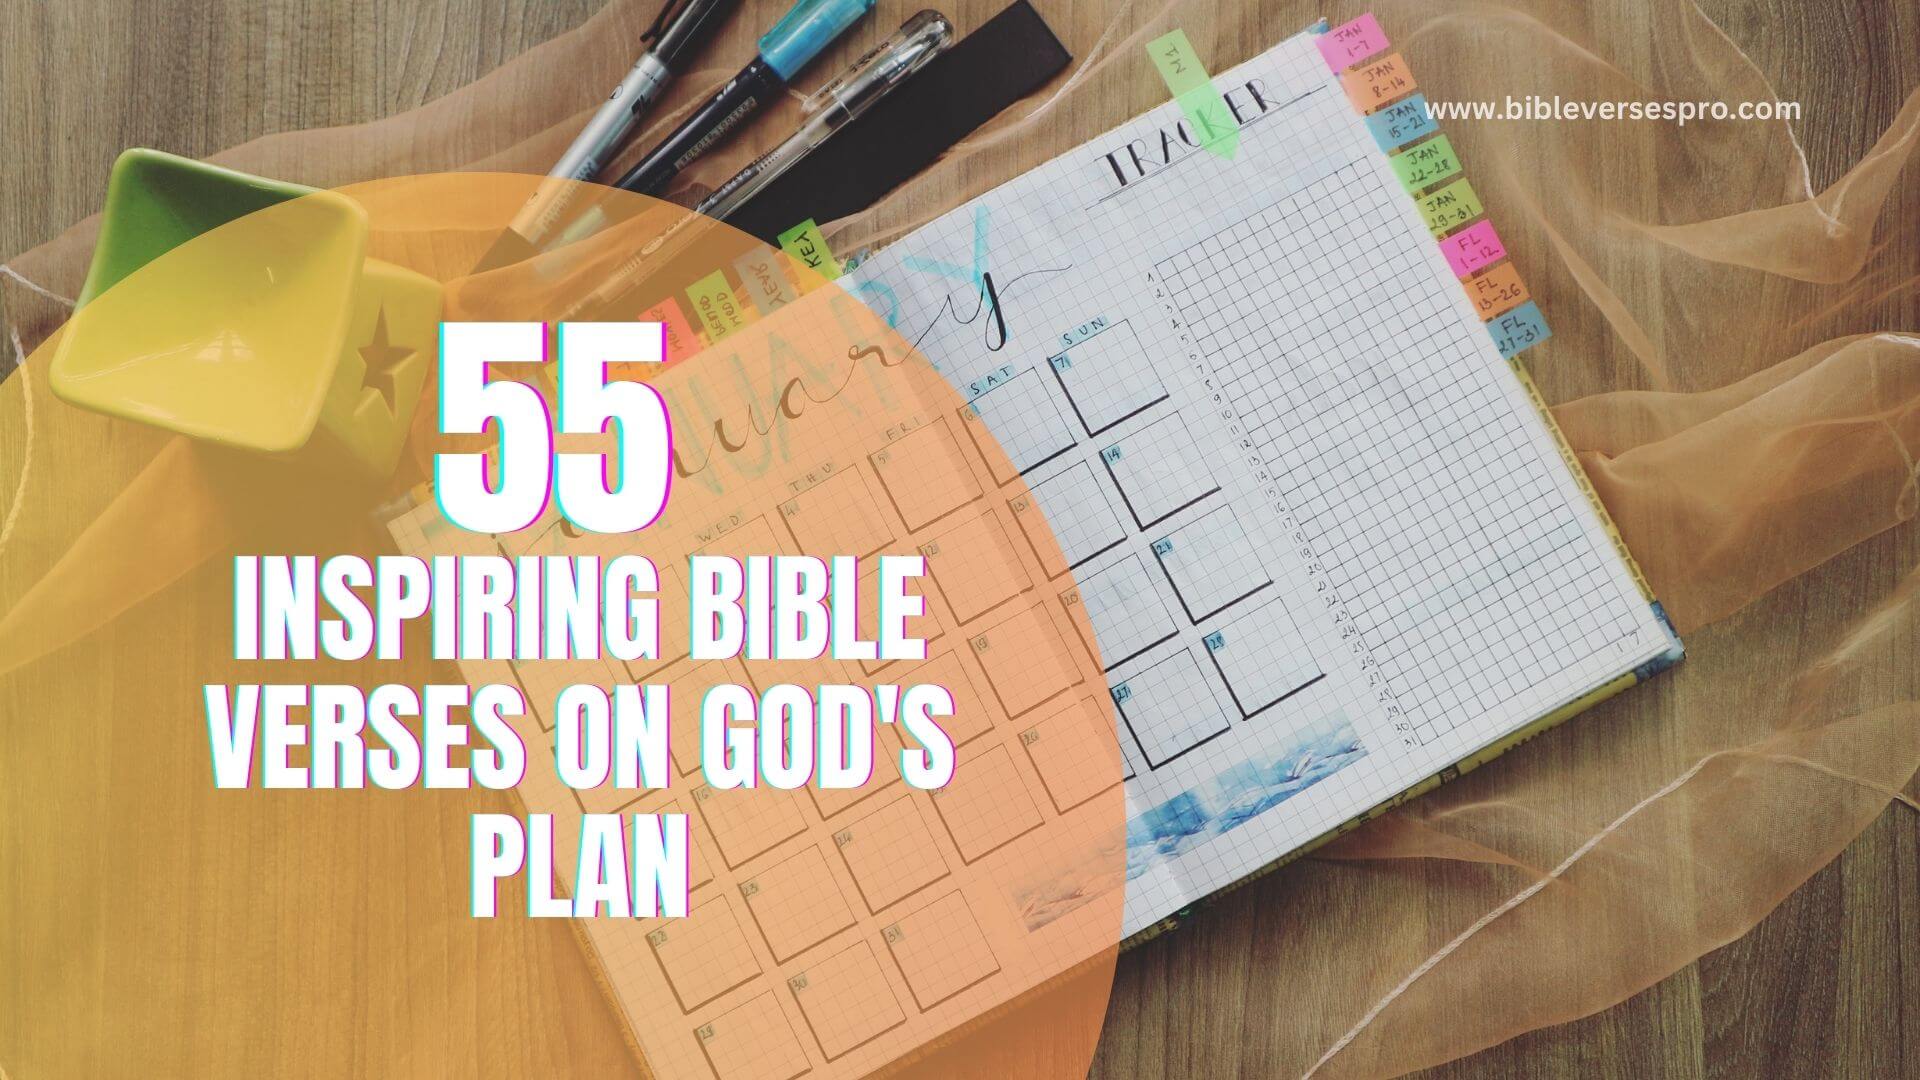 INSPIRING BIBLE VERSES ON GOD'S PLAN